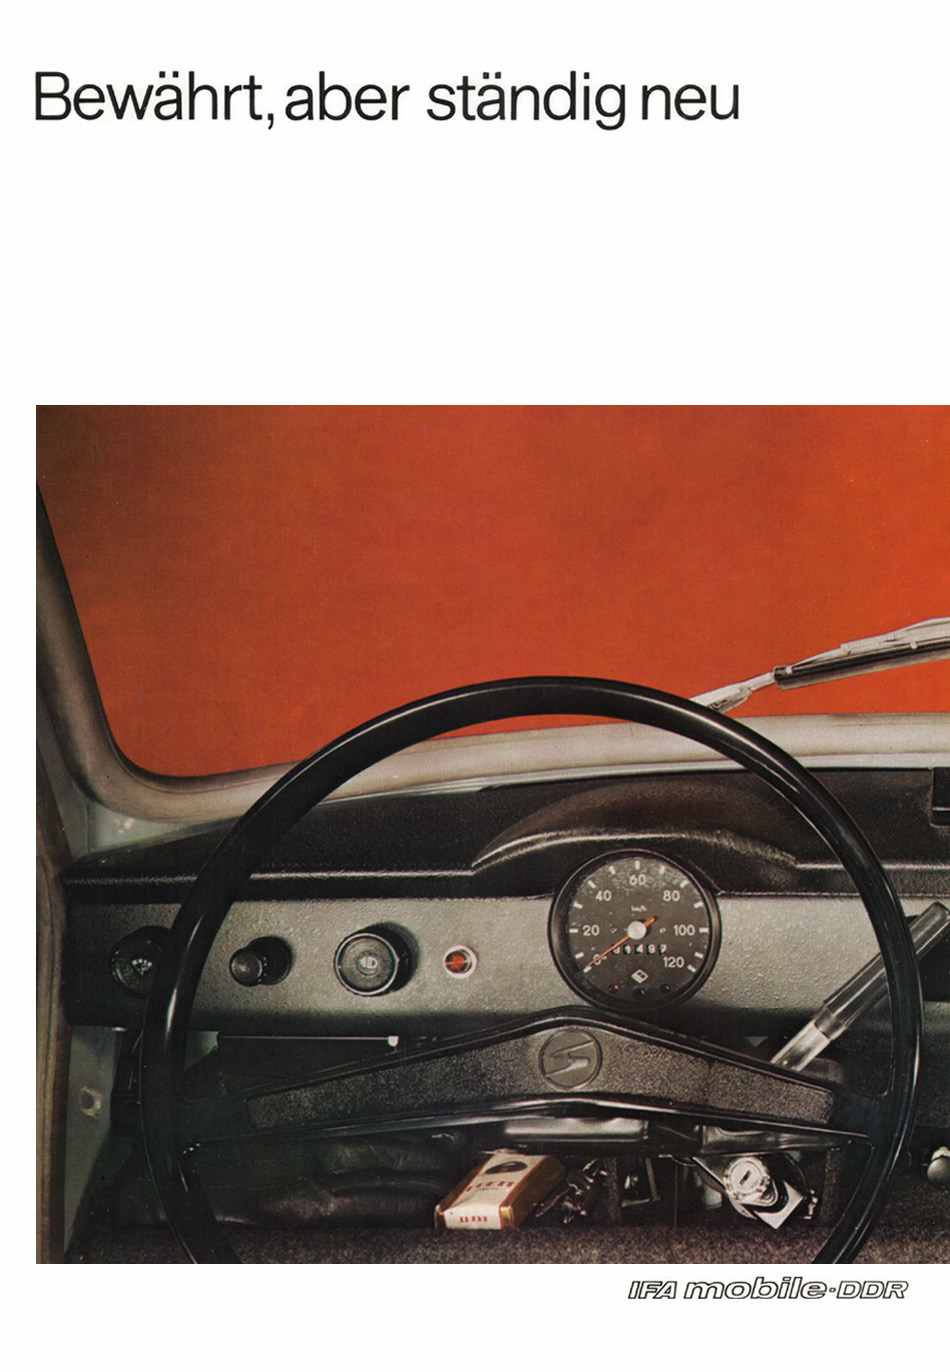 1975 - Trabant 601 - Seite 2